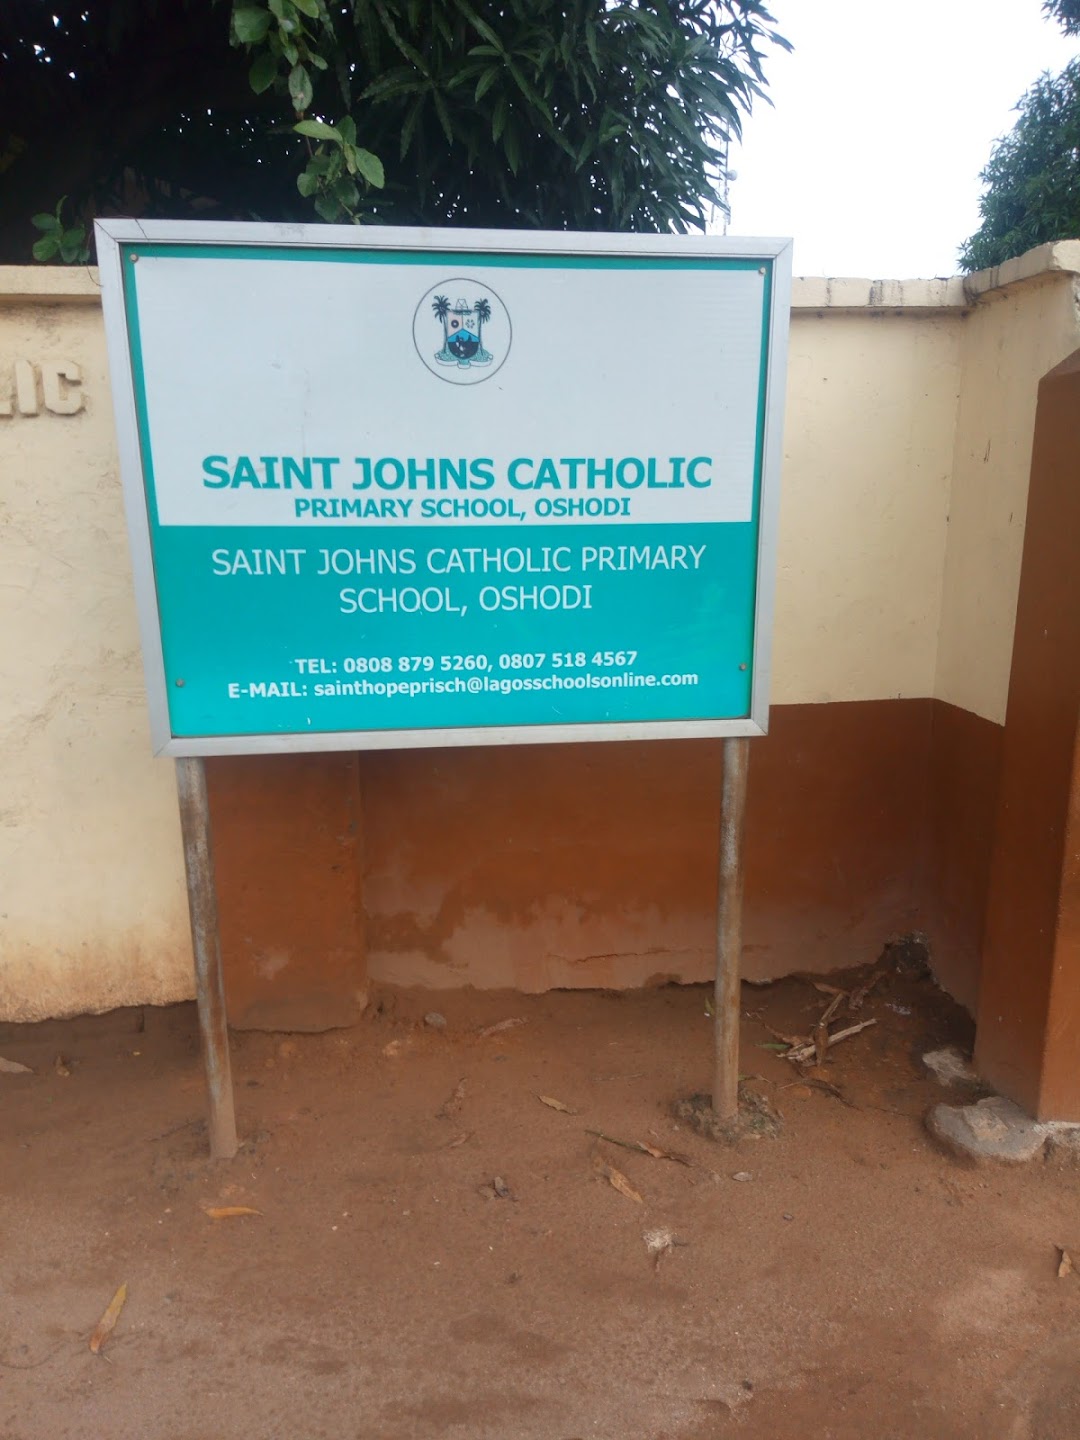 Saint Johns Catholic Primary School, Oshodi